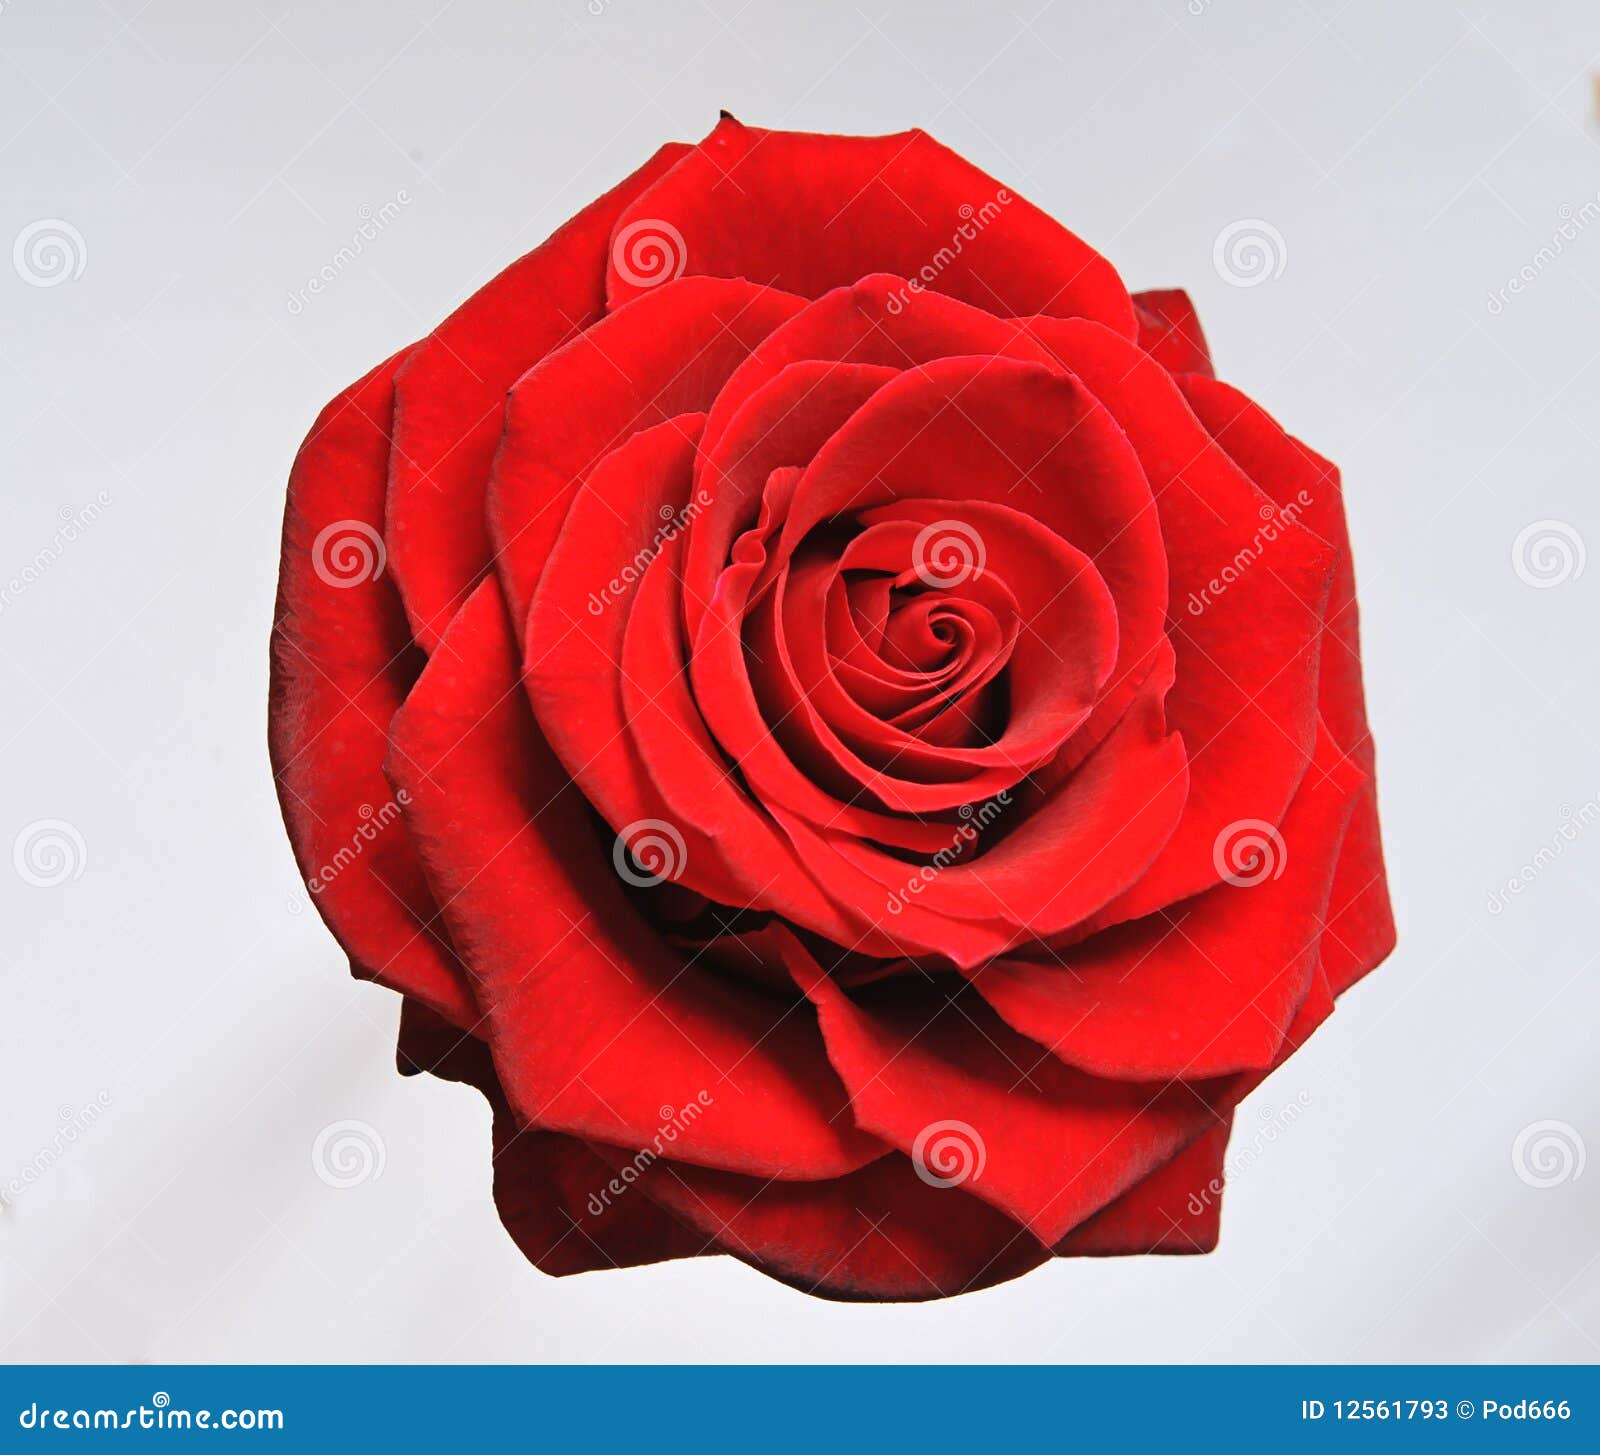 rose single red bloom